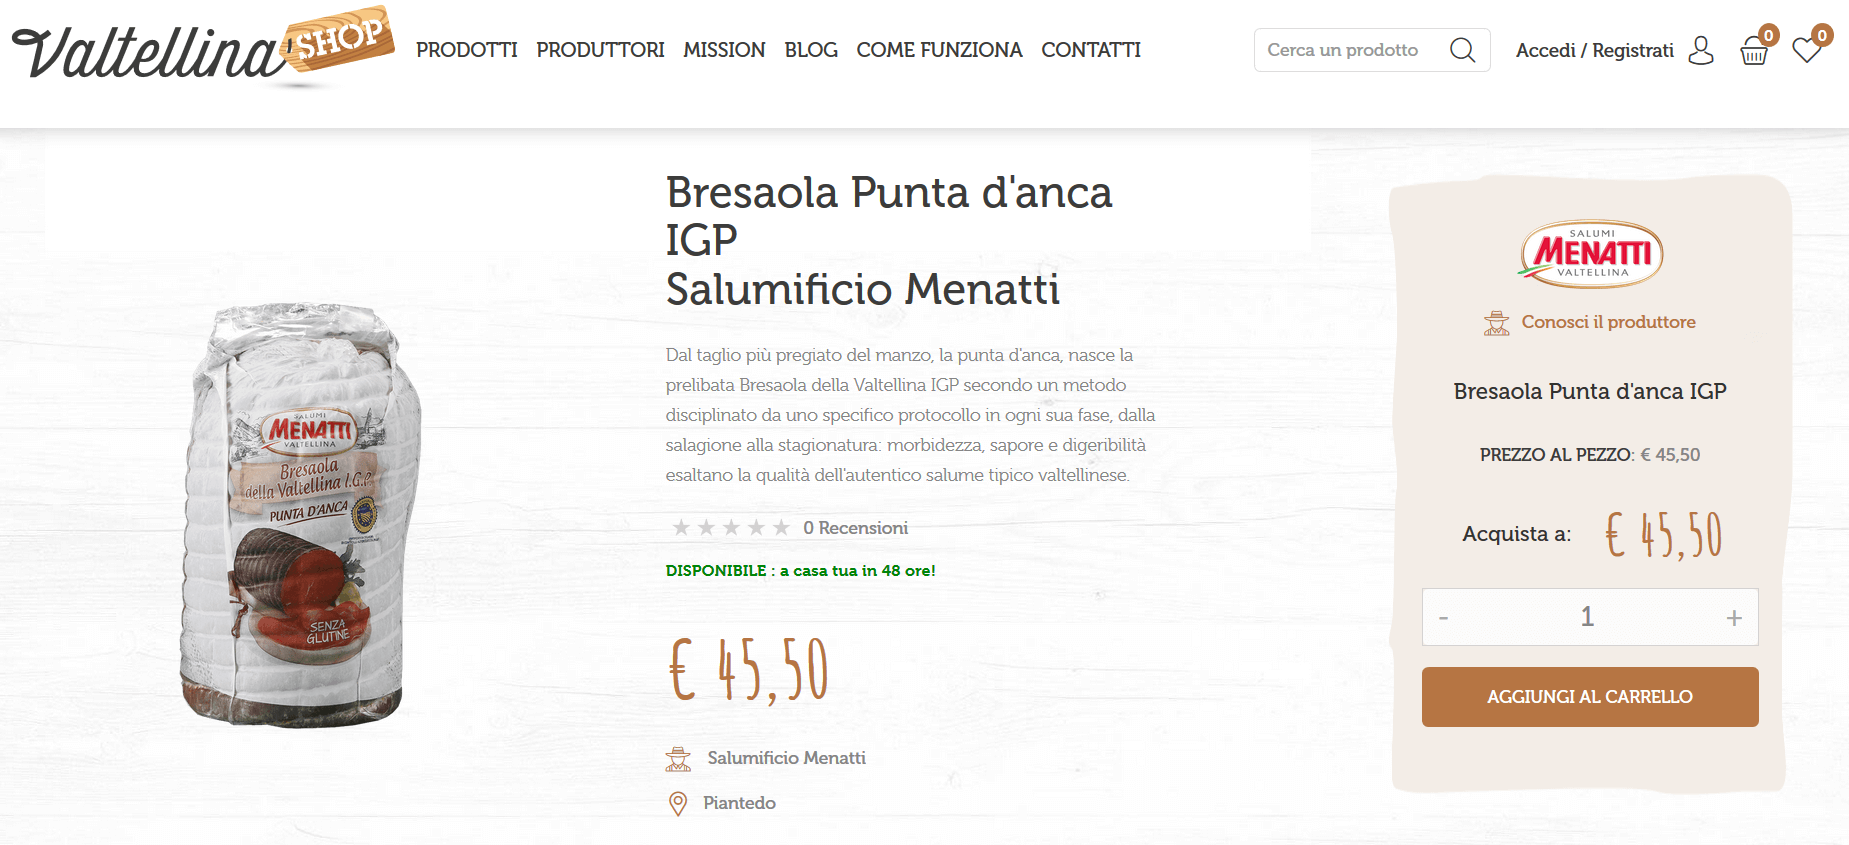 Bresaola punta d'anca IGP Menatti in vendita online su Valtellina Shop